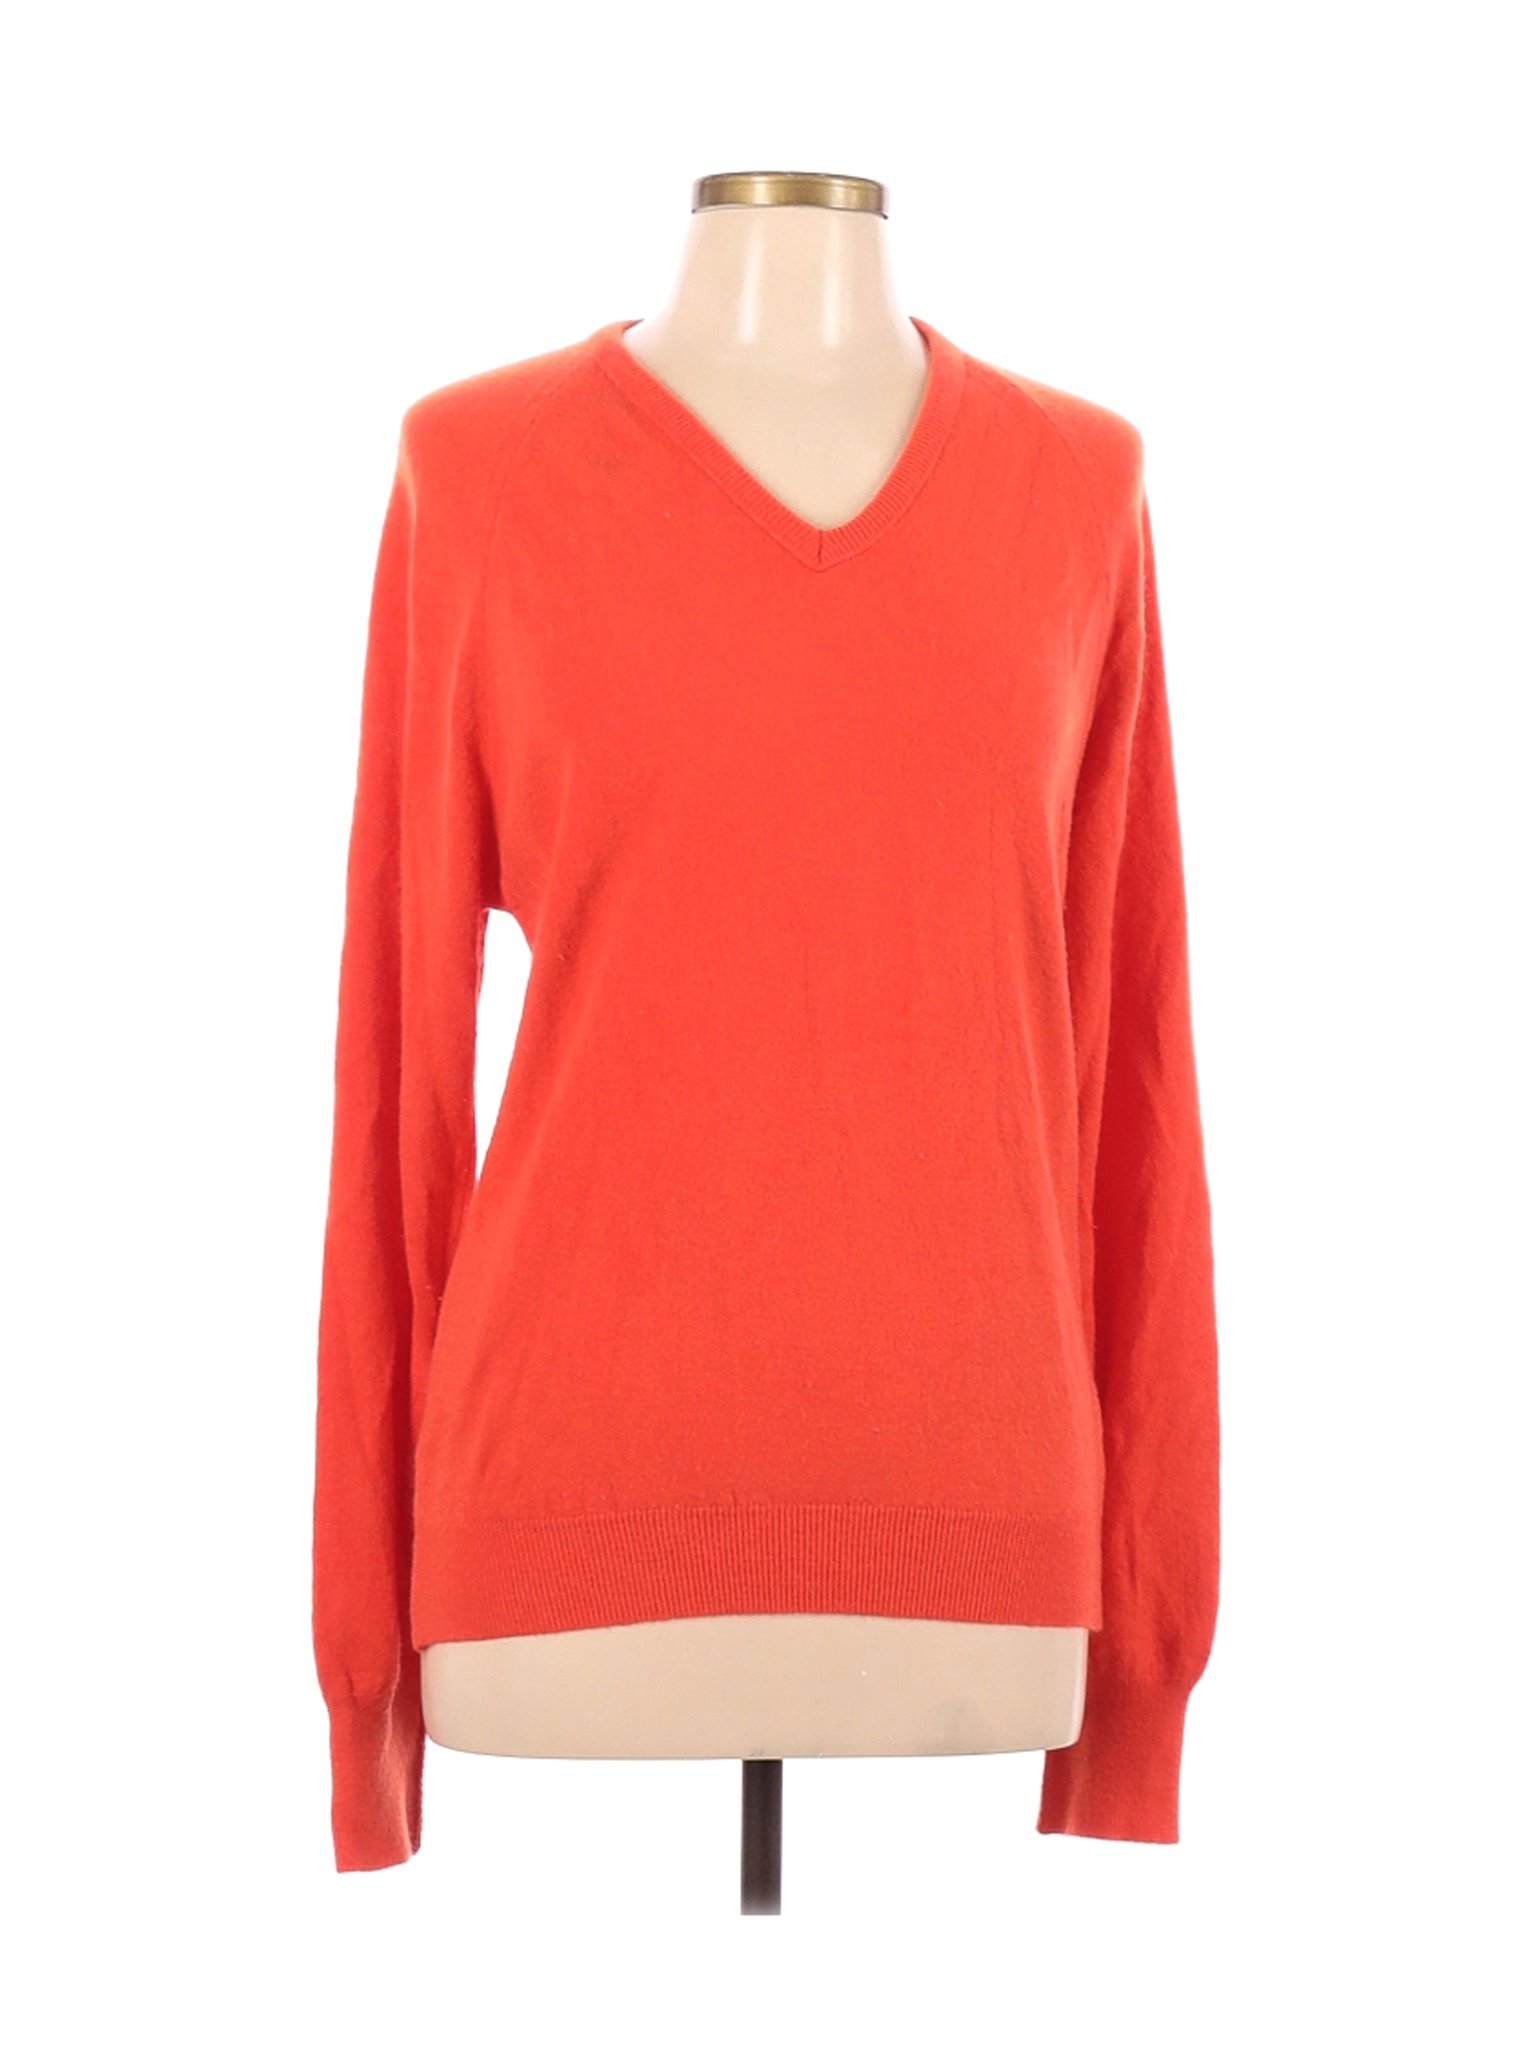 Puritan Women Orange Pullover Sweater M | eBay